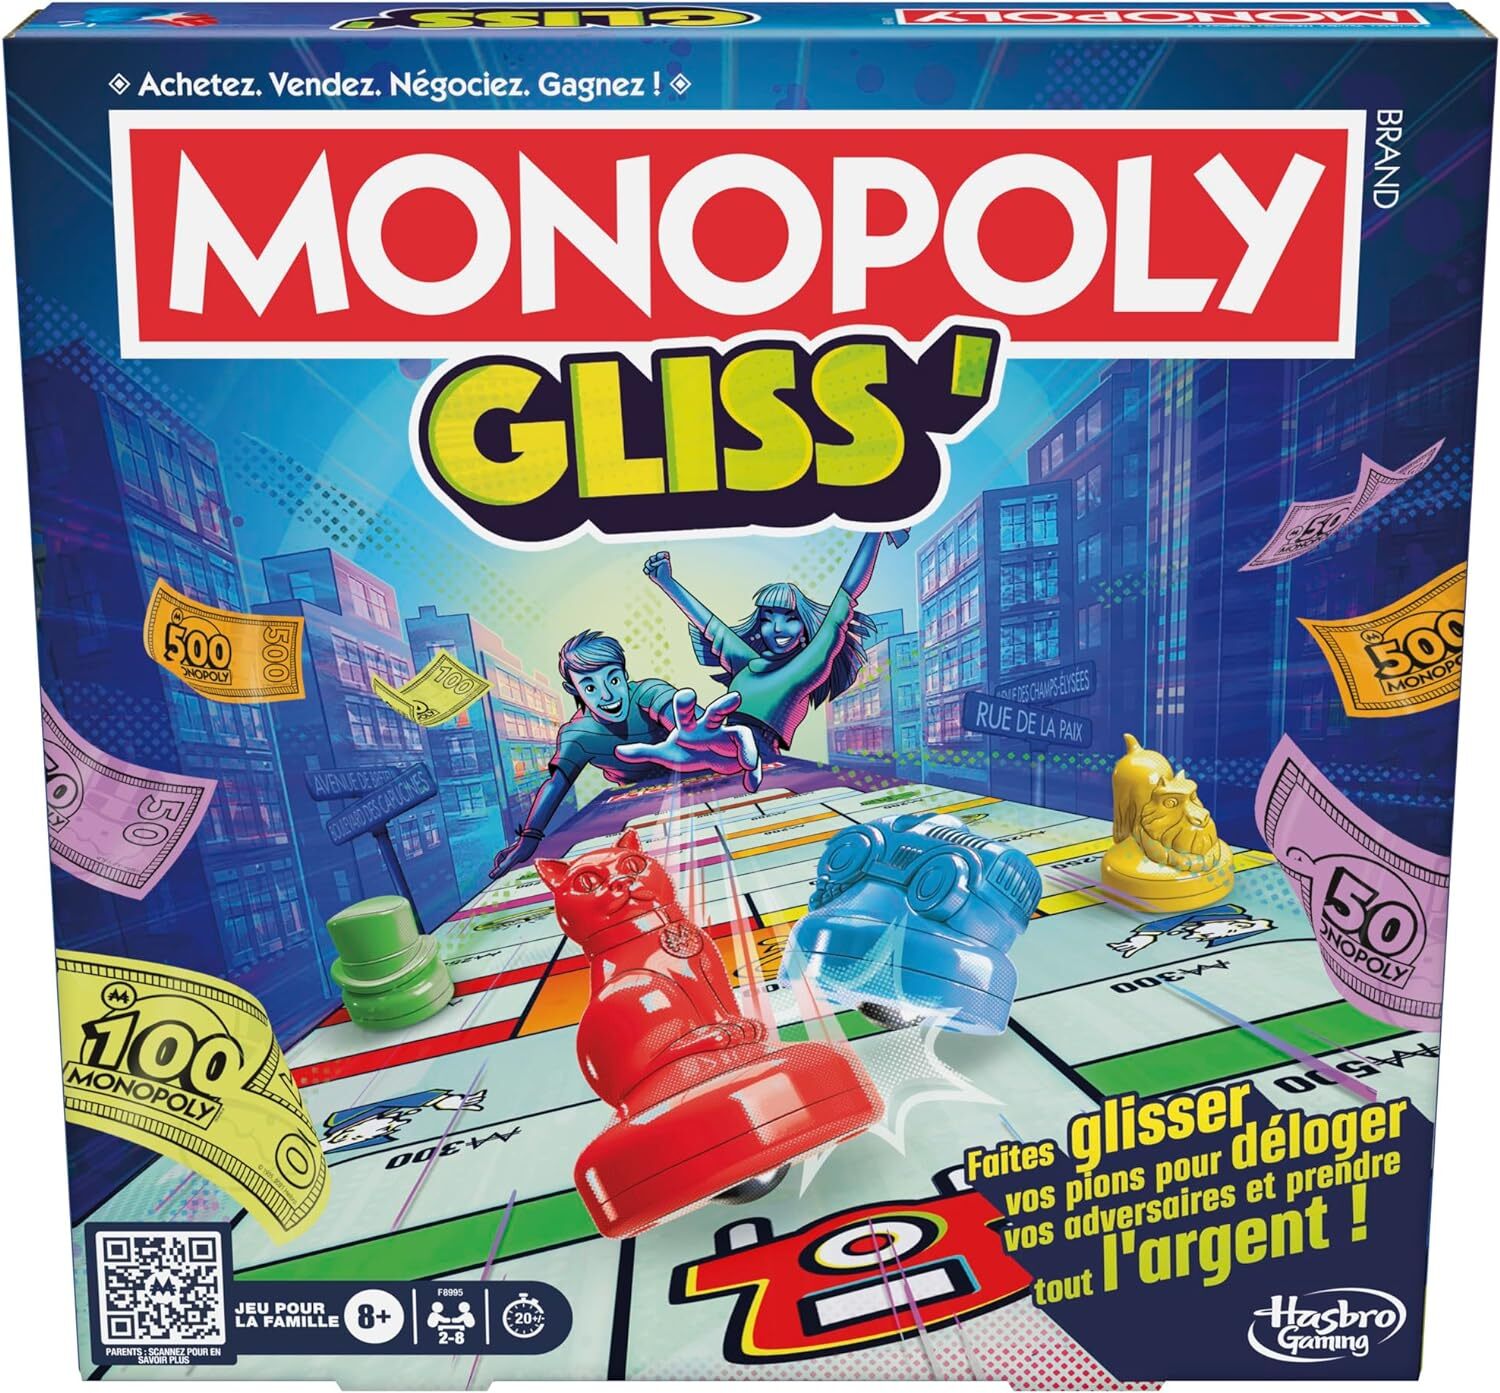 Monopoly Gliss